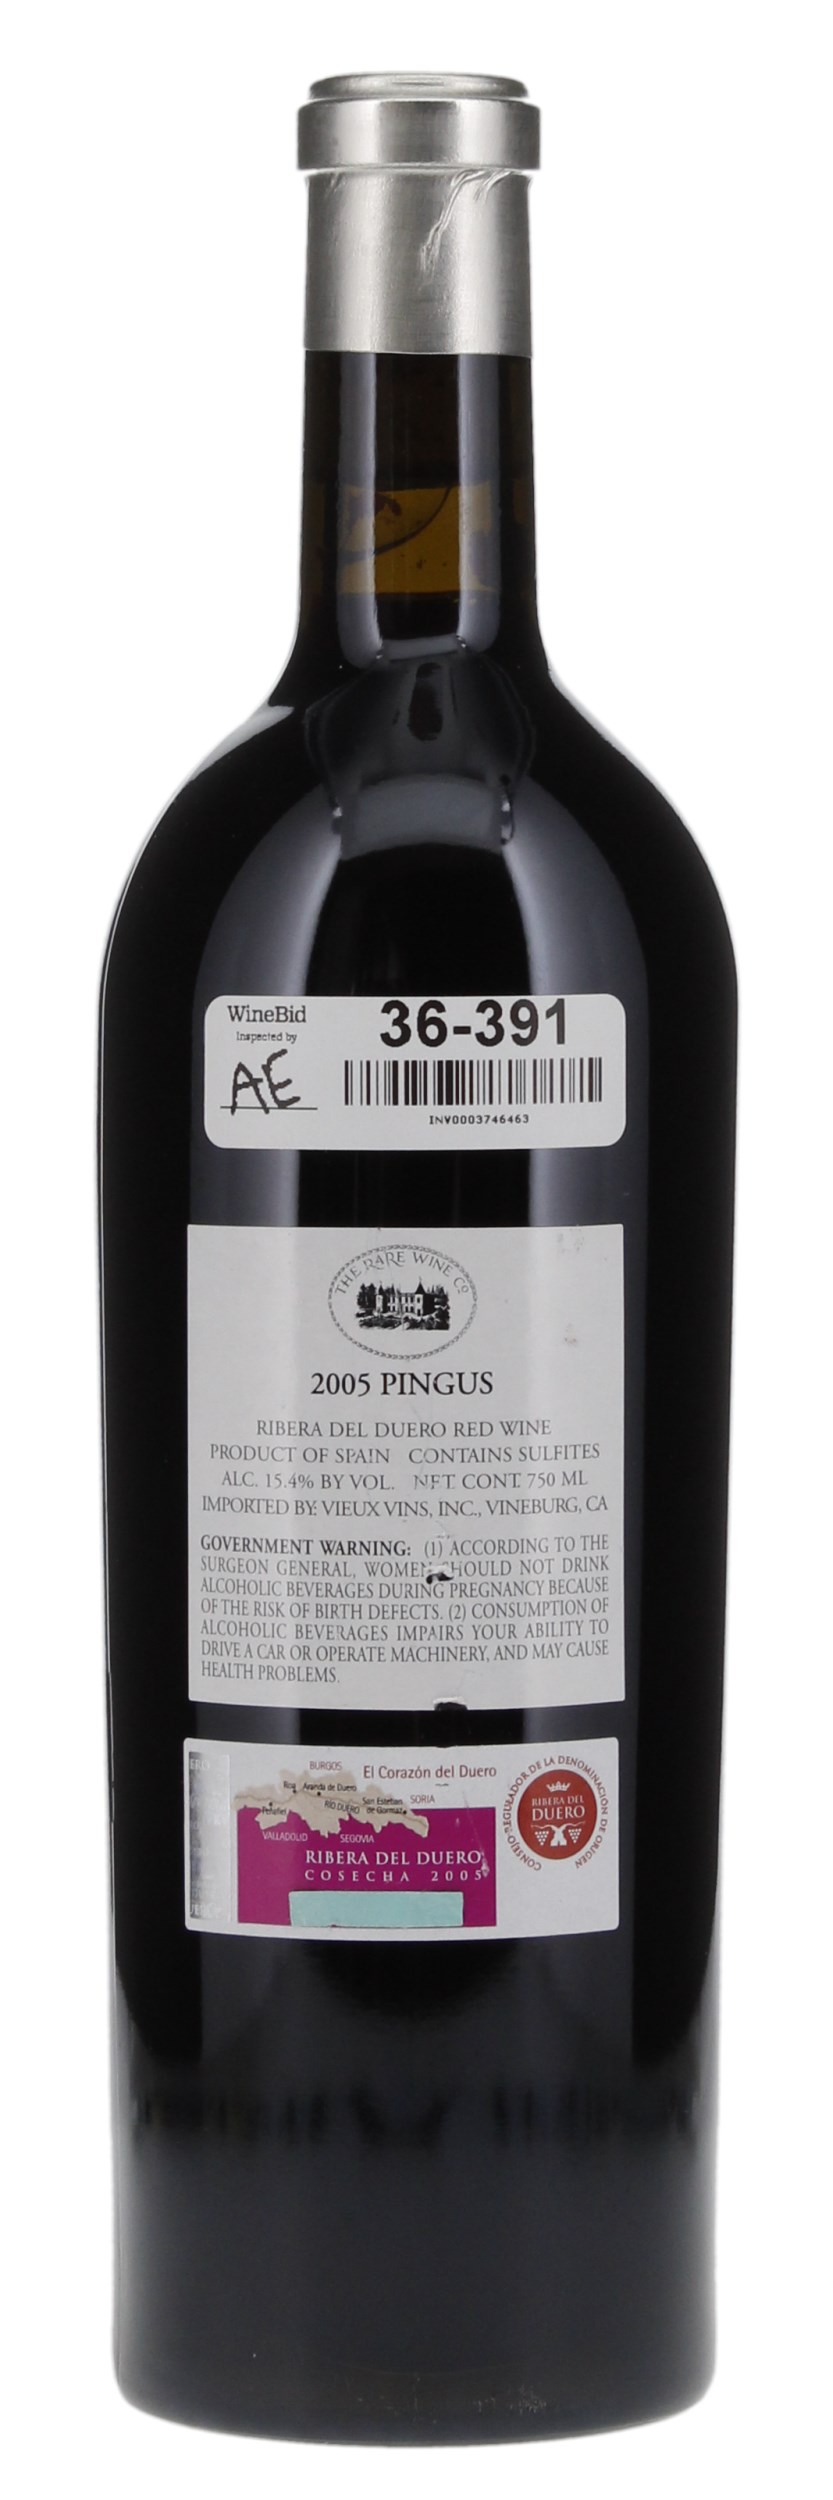 2005 Dominio de Pingus "Pingus", 750ml